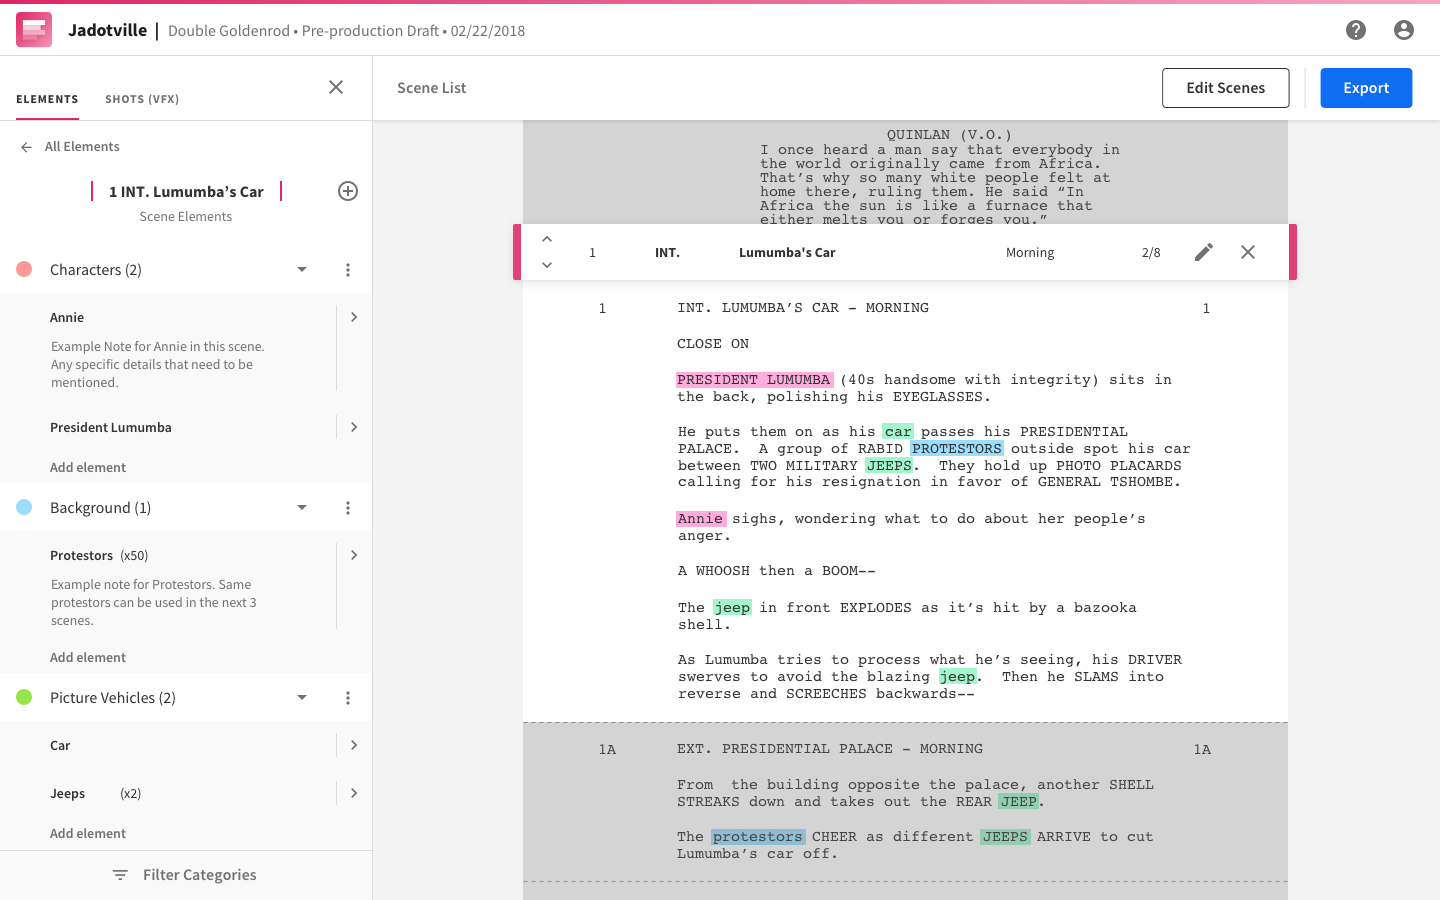 A screenshot of the P|Scripts application showing a scene breakdown